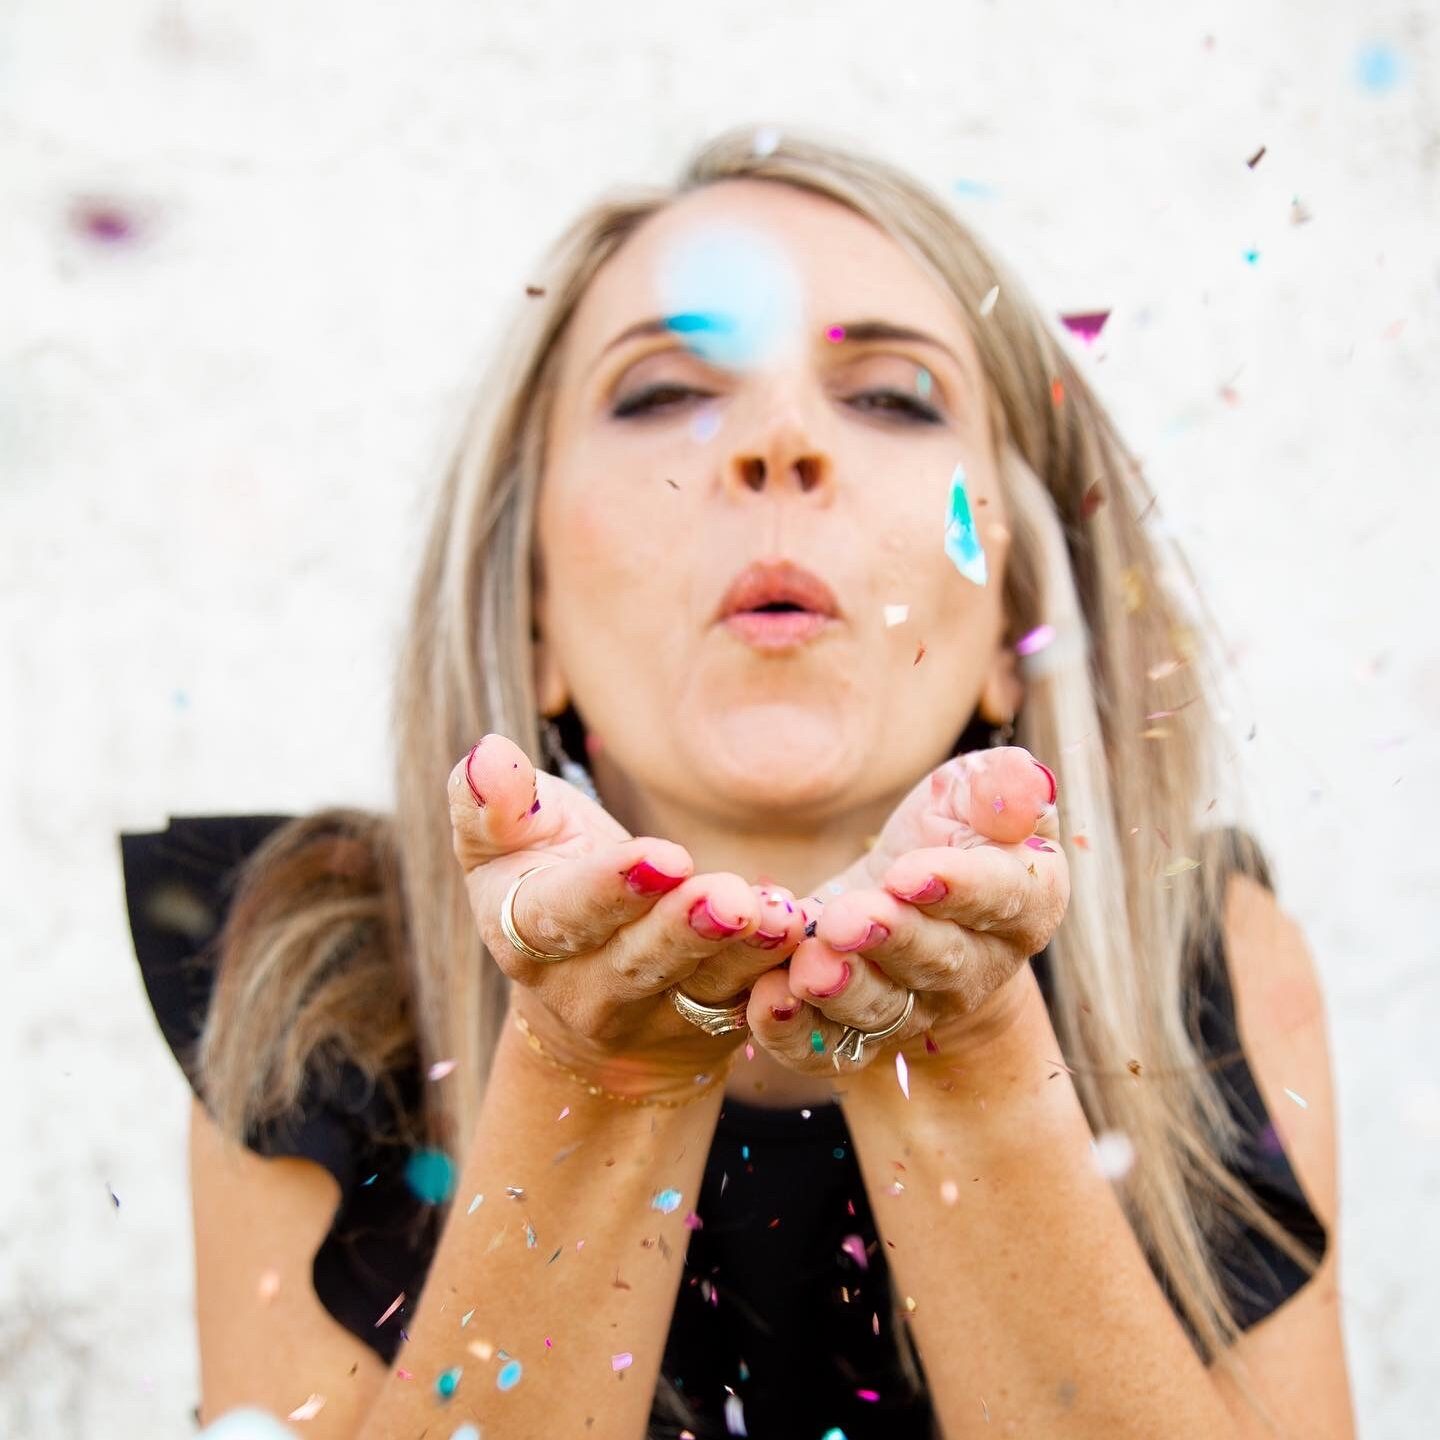 Woman celebrating with confetti